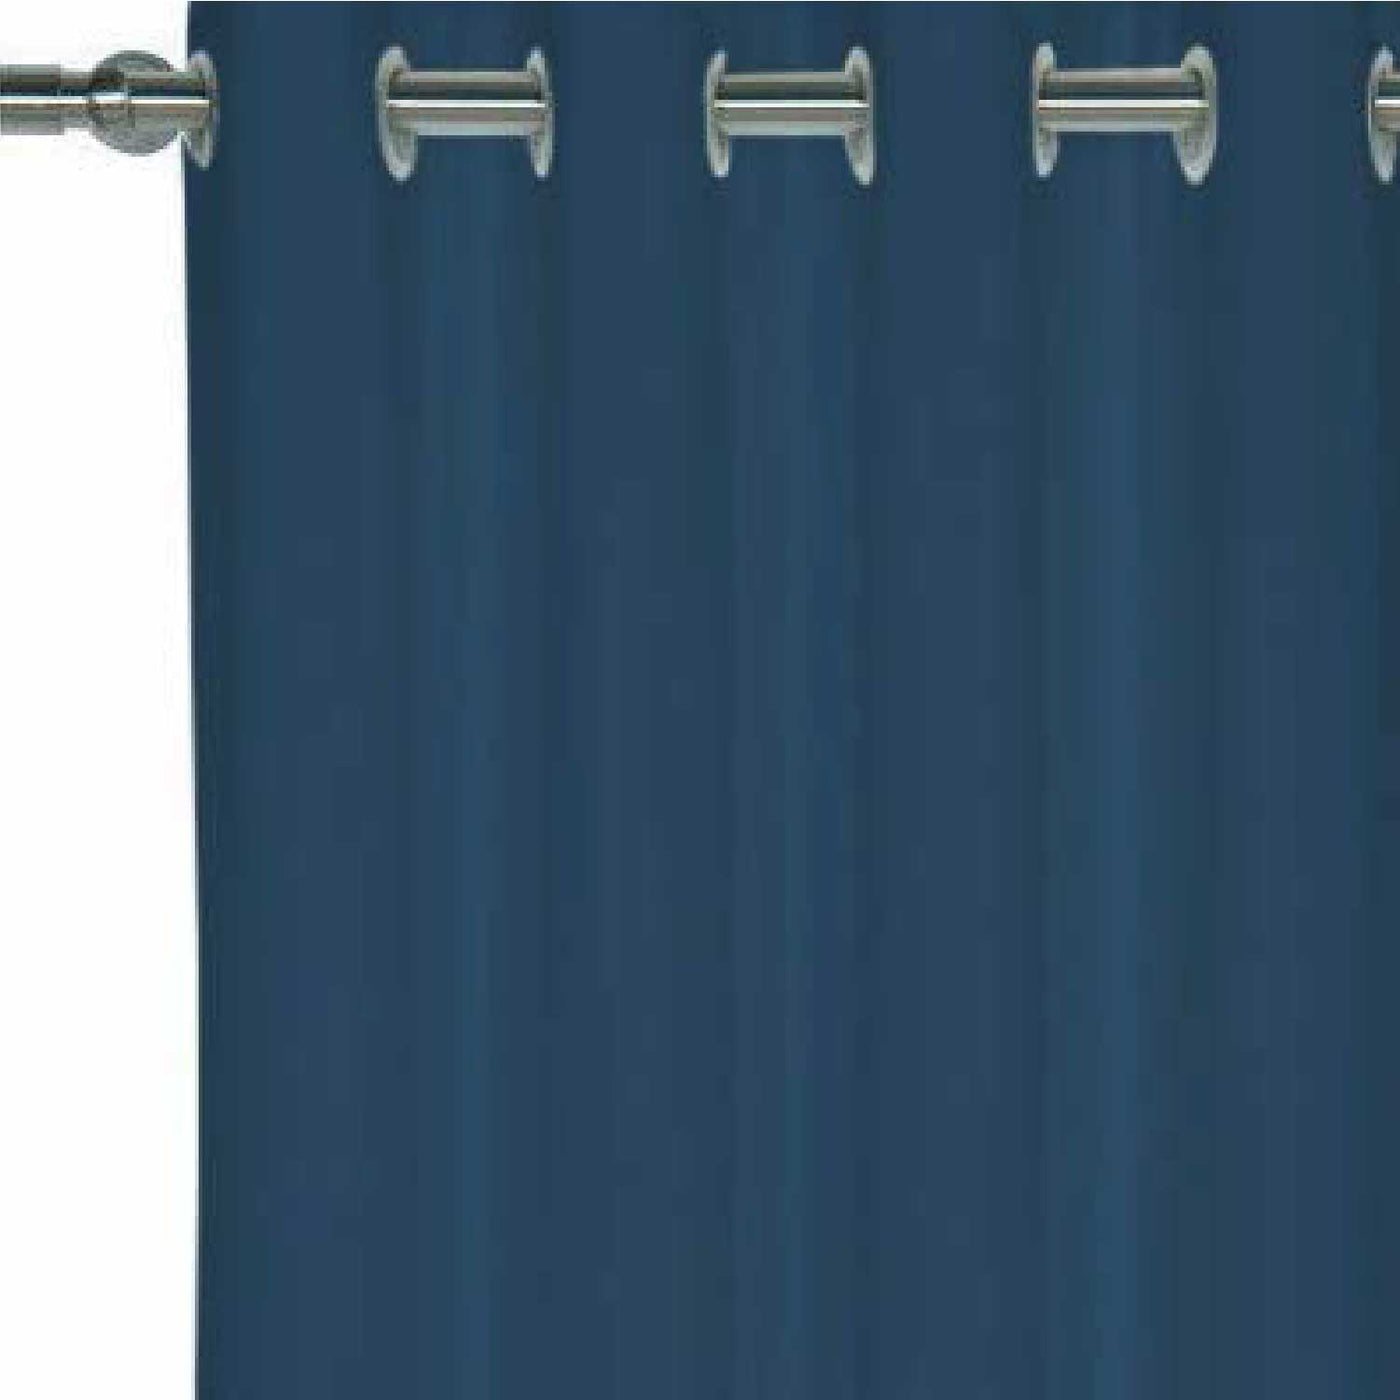 Grommet Curtains 1 Piece - Navy Blue